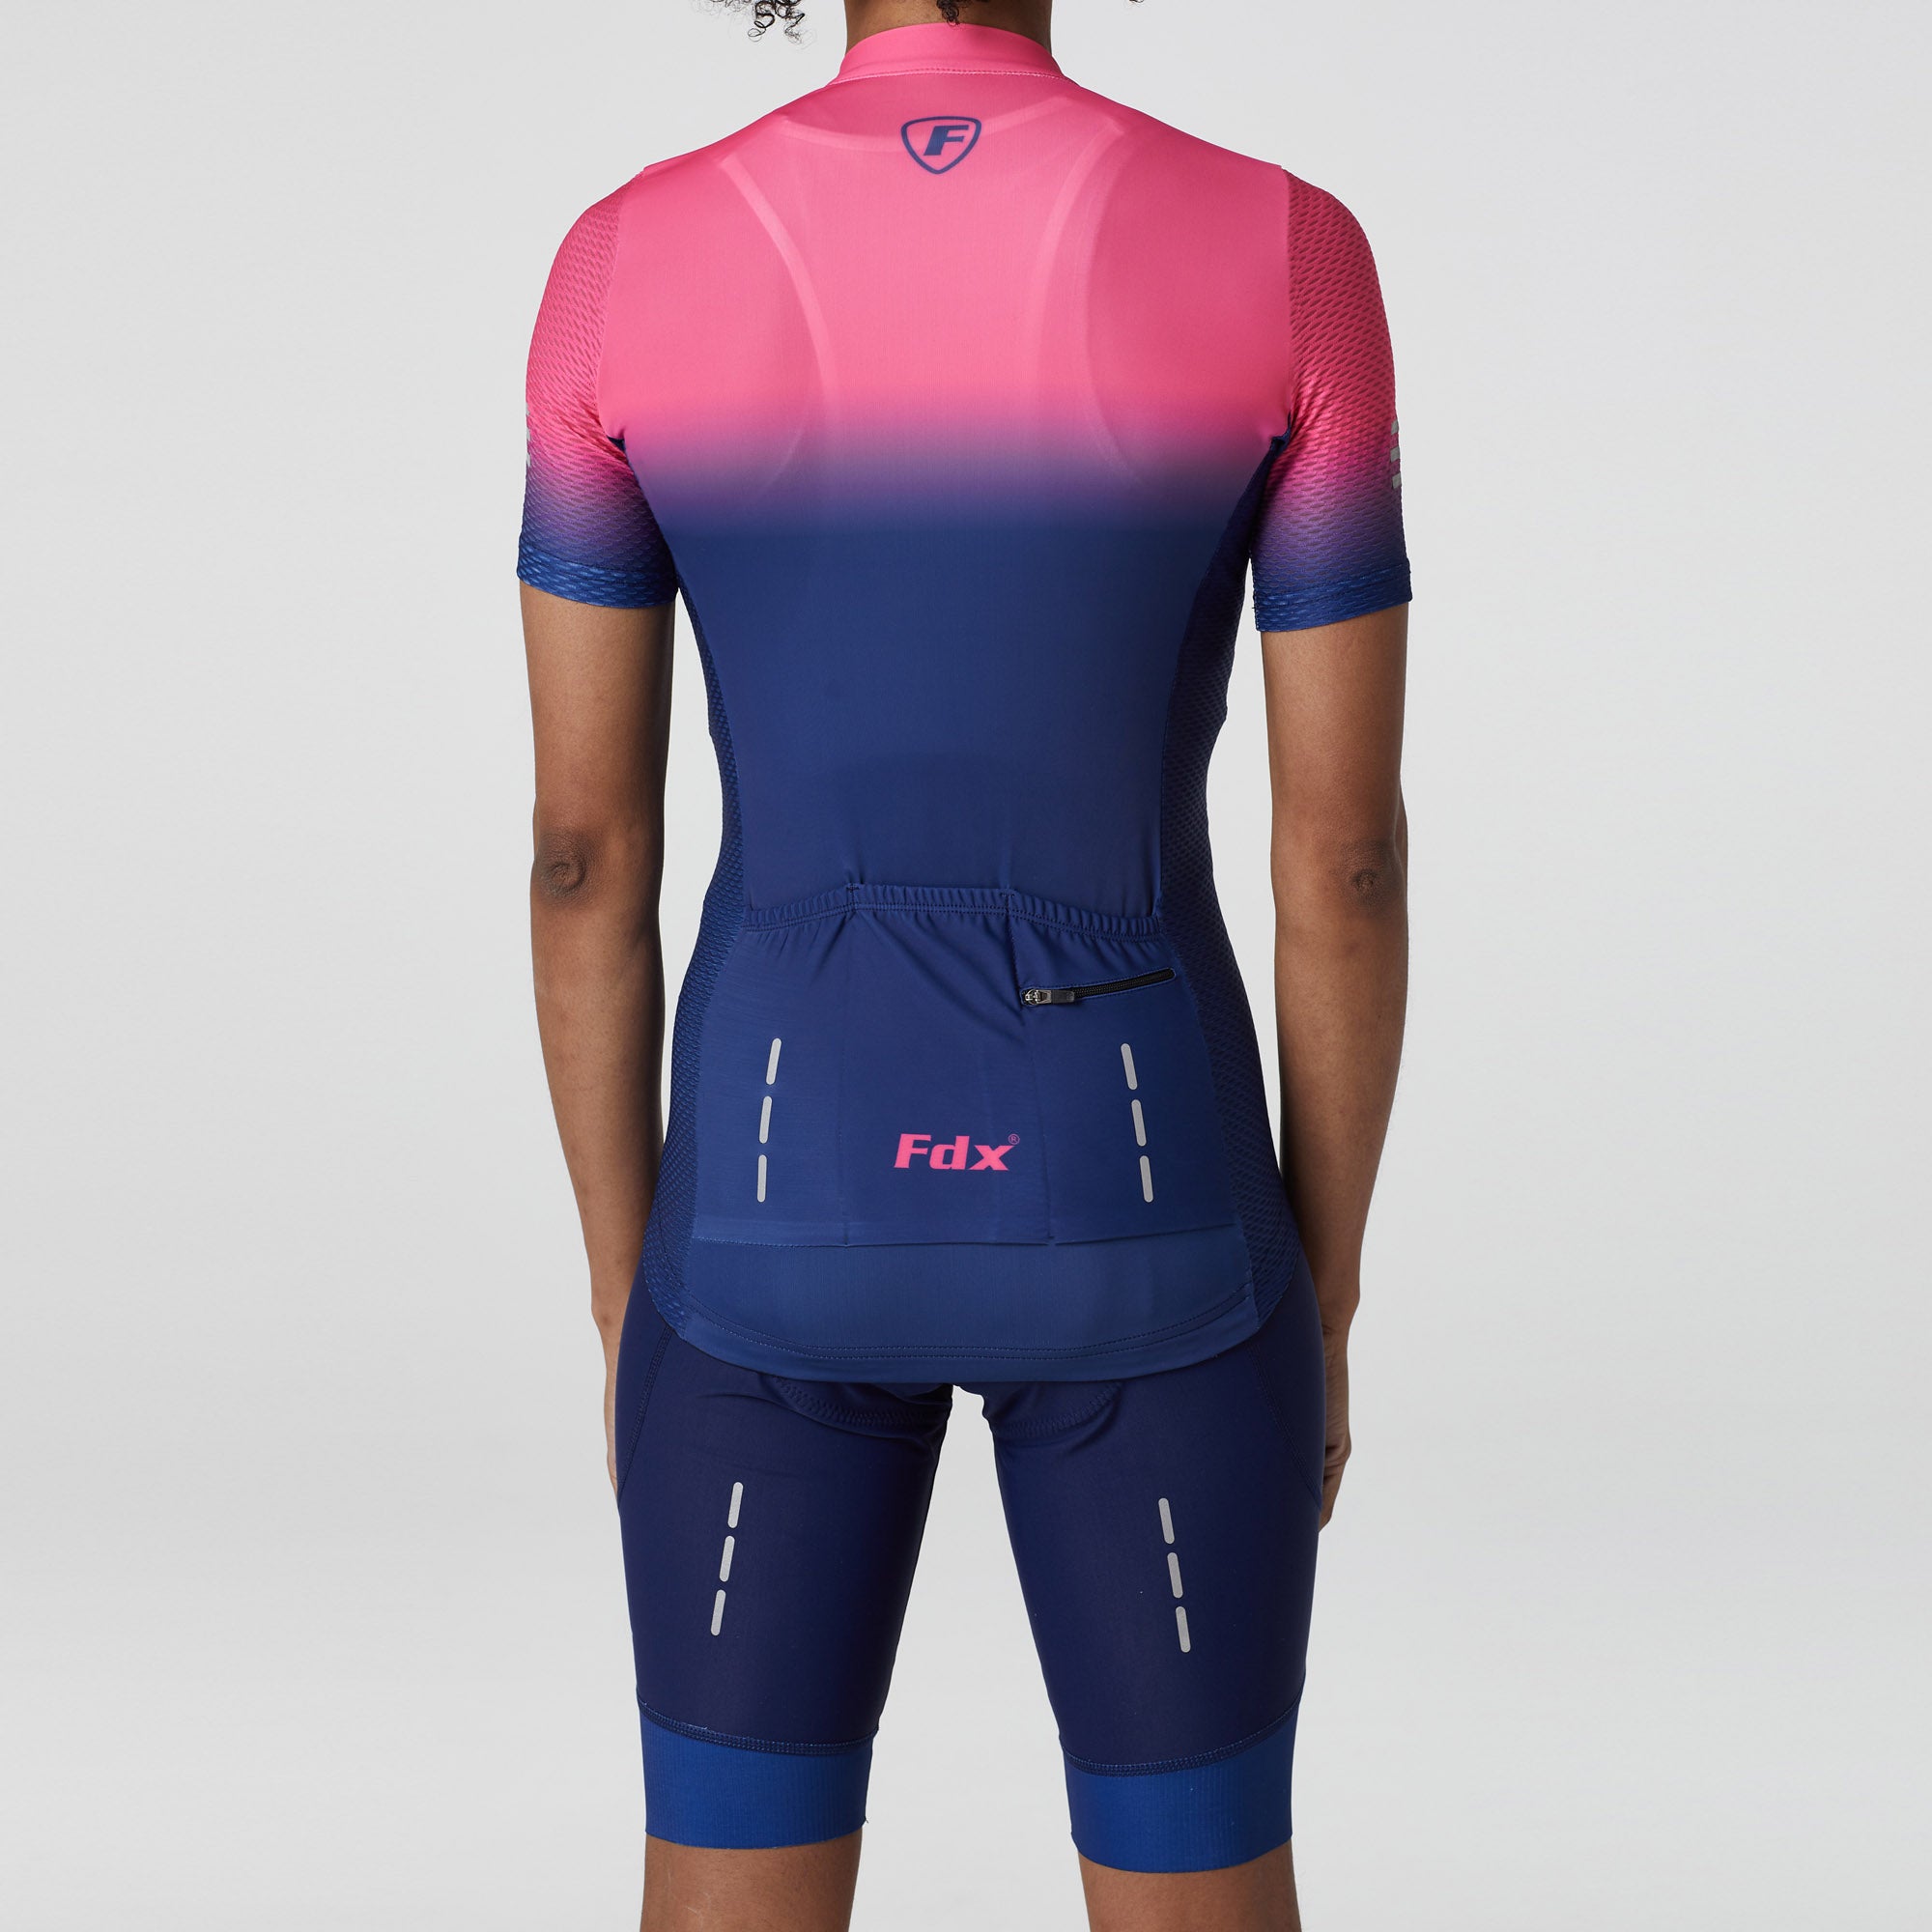 Fdx Womens Pink / Blue Short Sleeve Cycling Jersey & Gel Padded Bib Shorts Best Summer Road Bike Wear Light Weight, Hi-viz Reflectors & Pockets - Duo